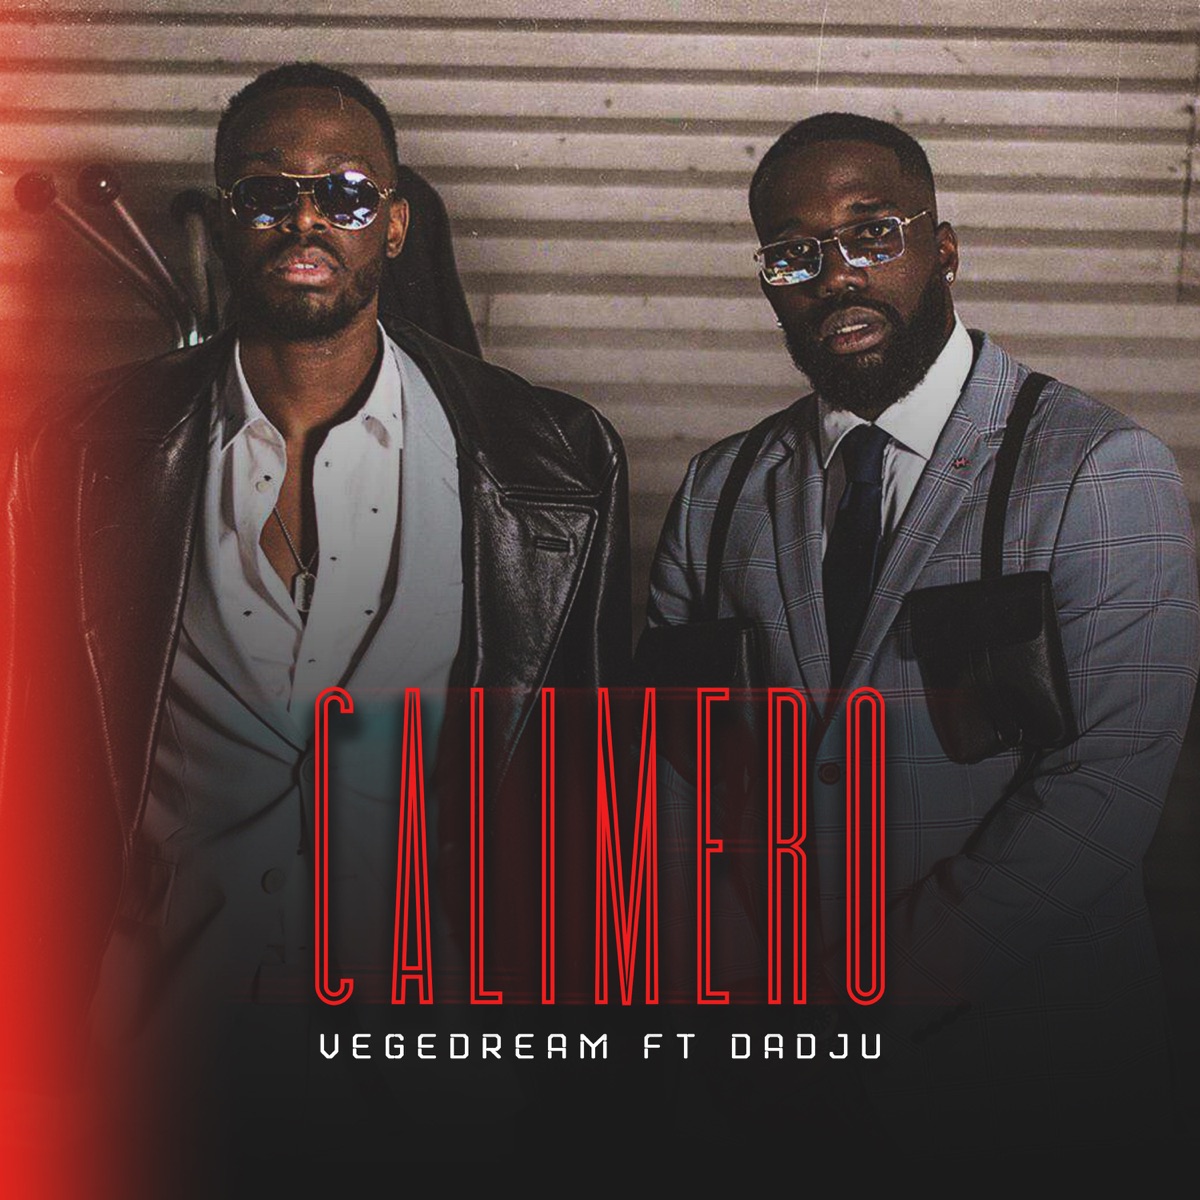 Calimero (feat. Dadju) - Single by Vegedream on Apple Music